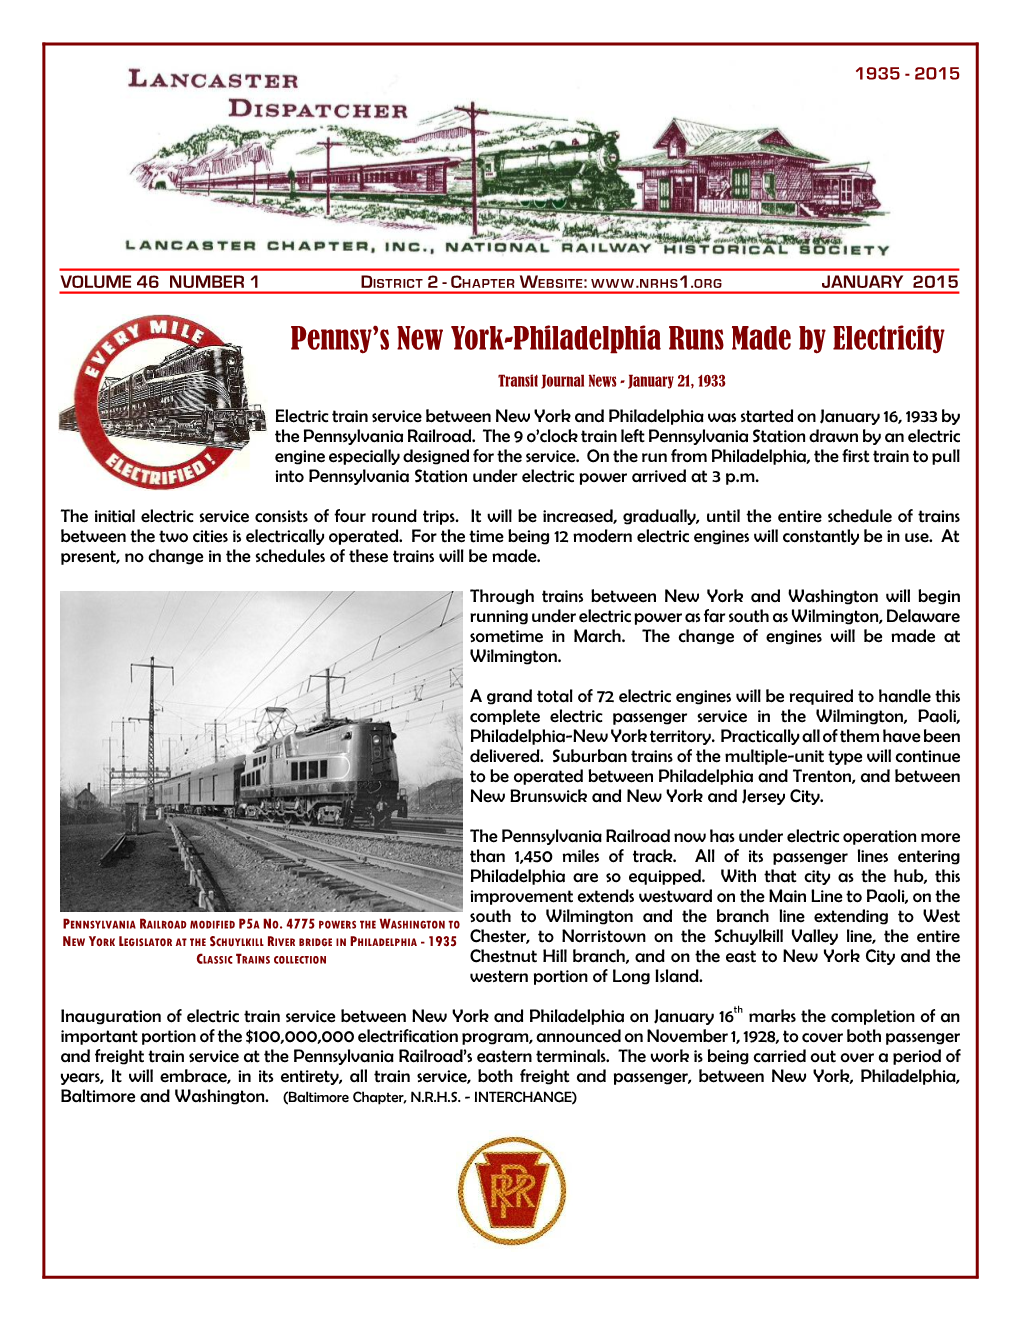 Pennsy's New York-Philadelphia Runs Made by Electricity